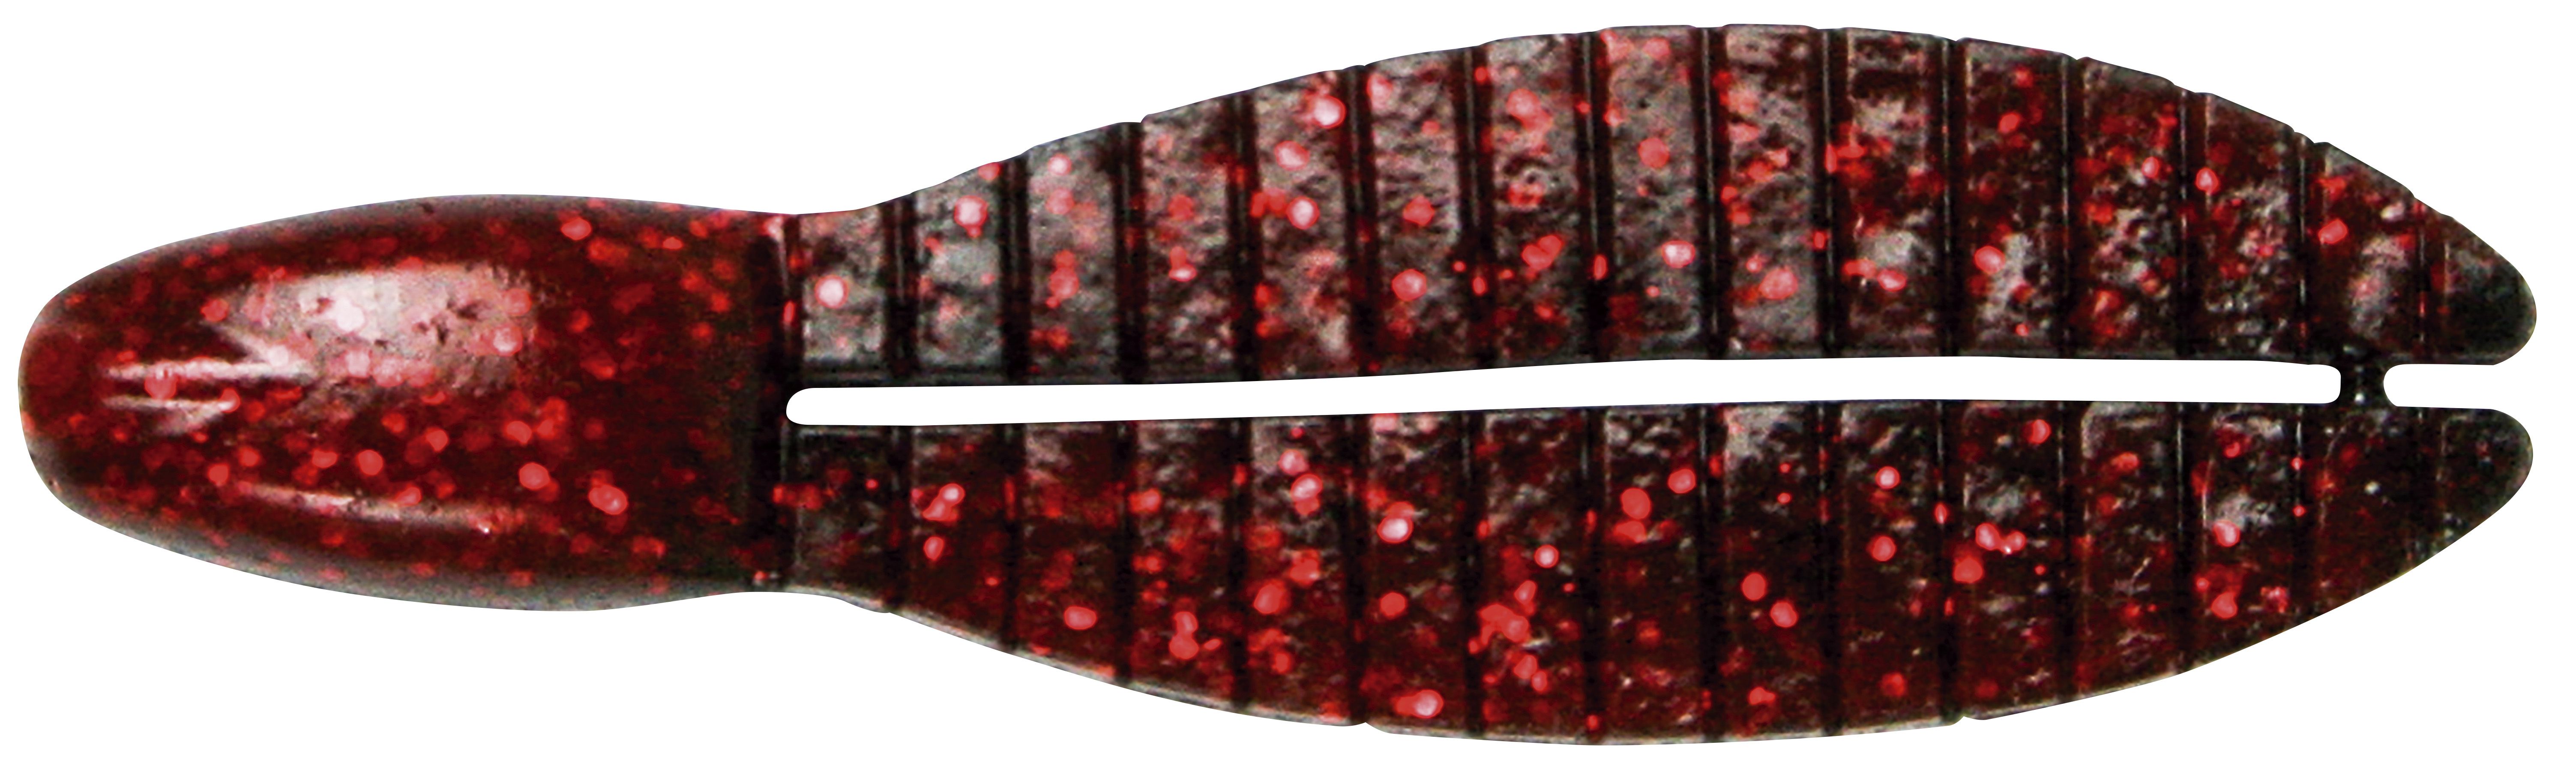 Keitech Flex Chunk Medium 3 inch (7,6cm) - 411-Black Cherry Under